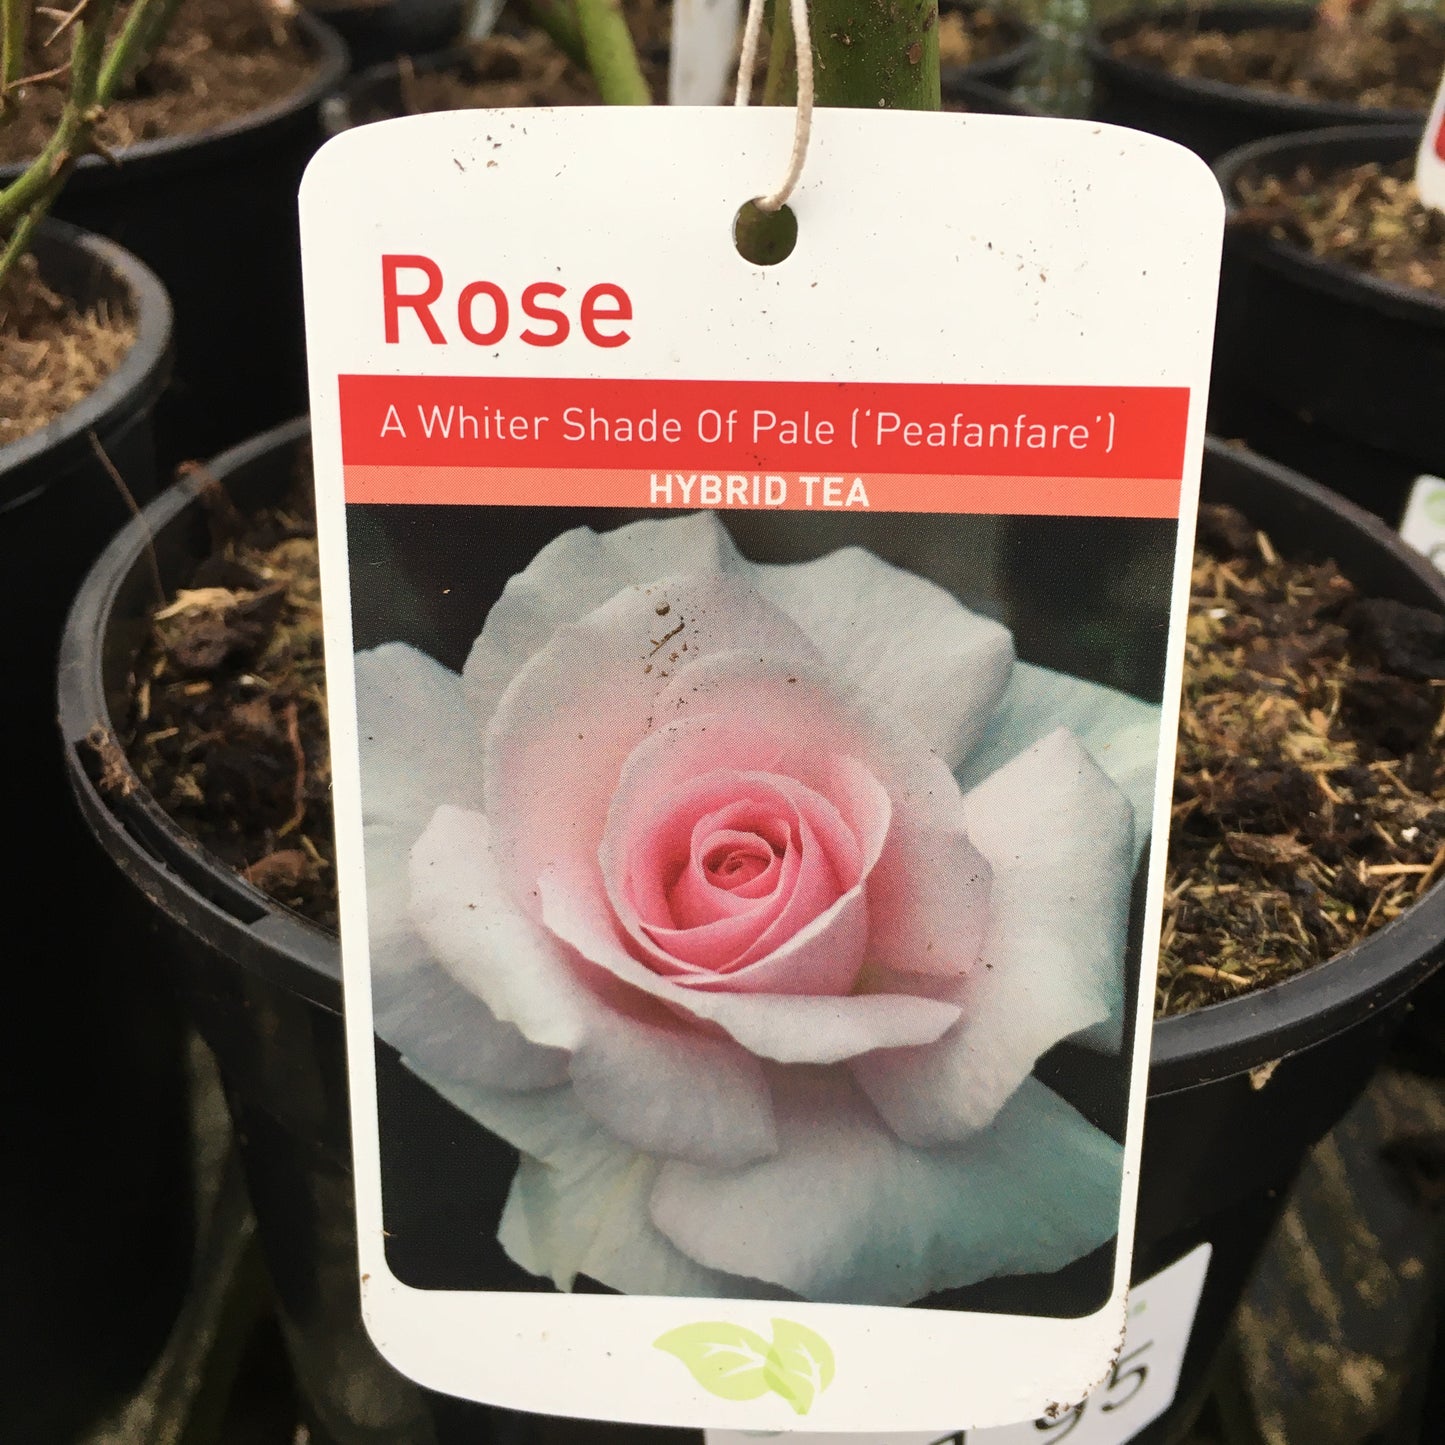 Rose A Whiter Shade of Pale - 5.5L Hybrid Tea